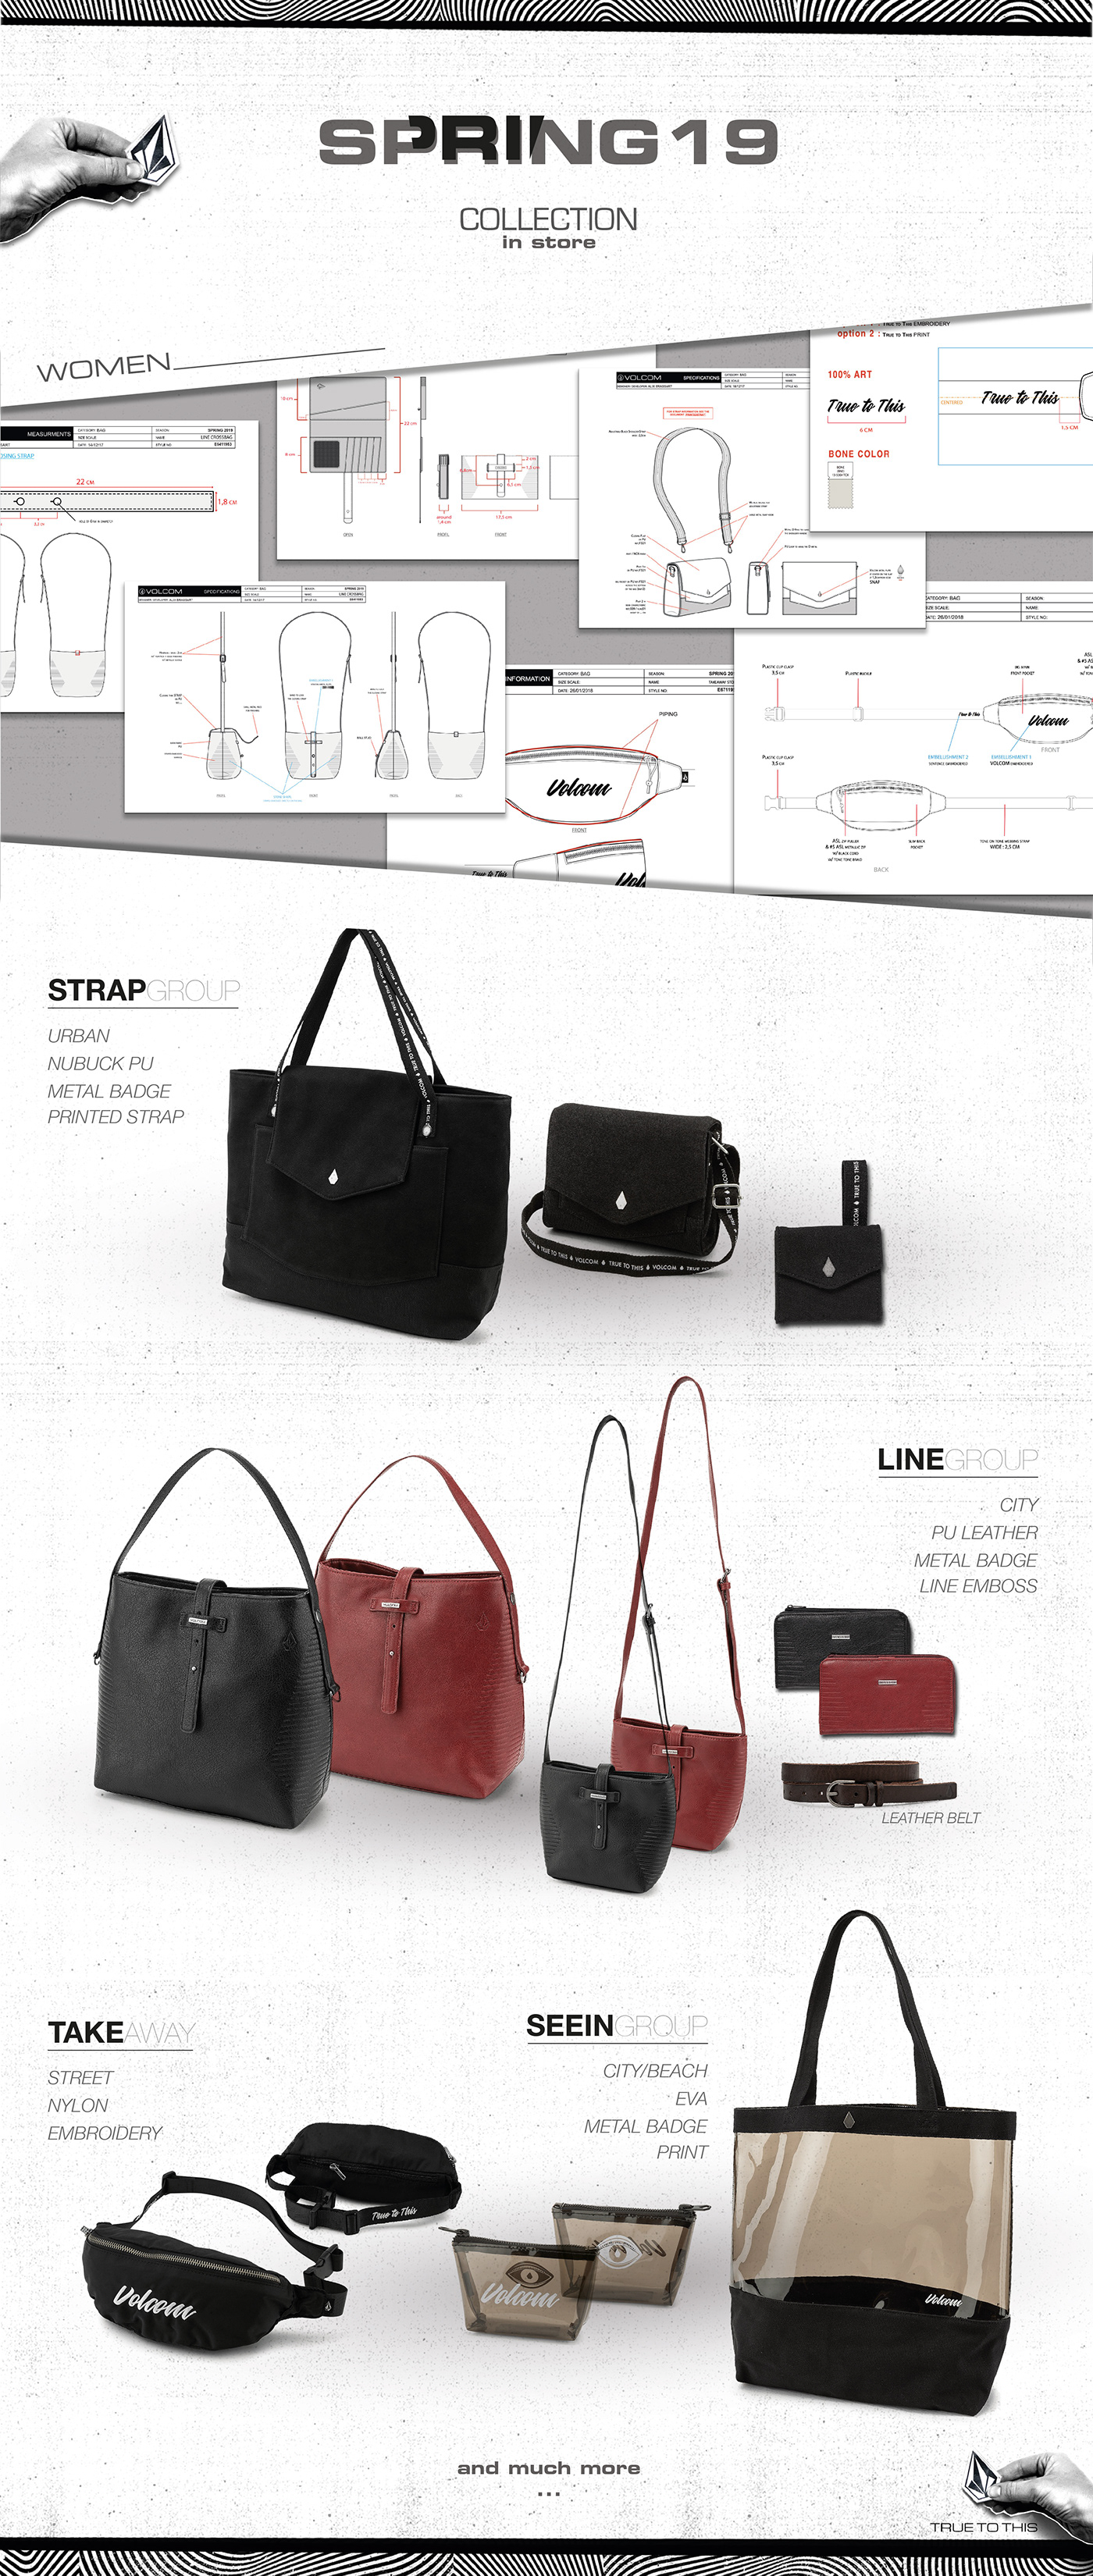 volcom design design product accessories developer fashion design stylism bags